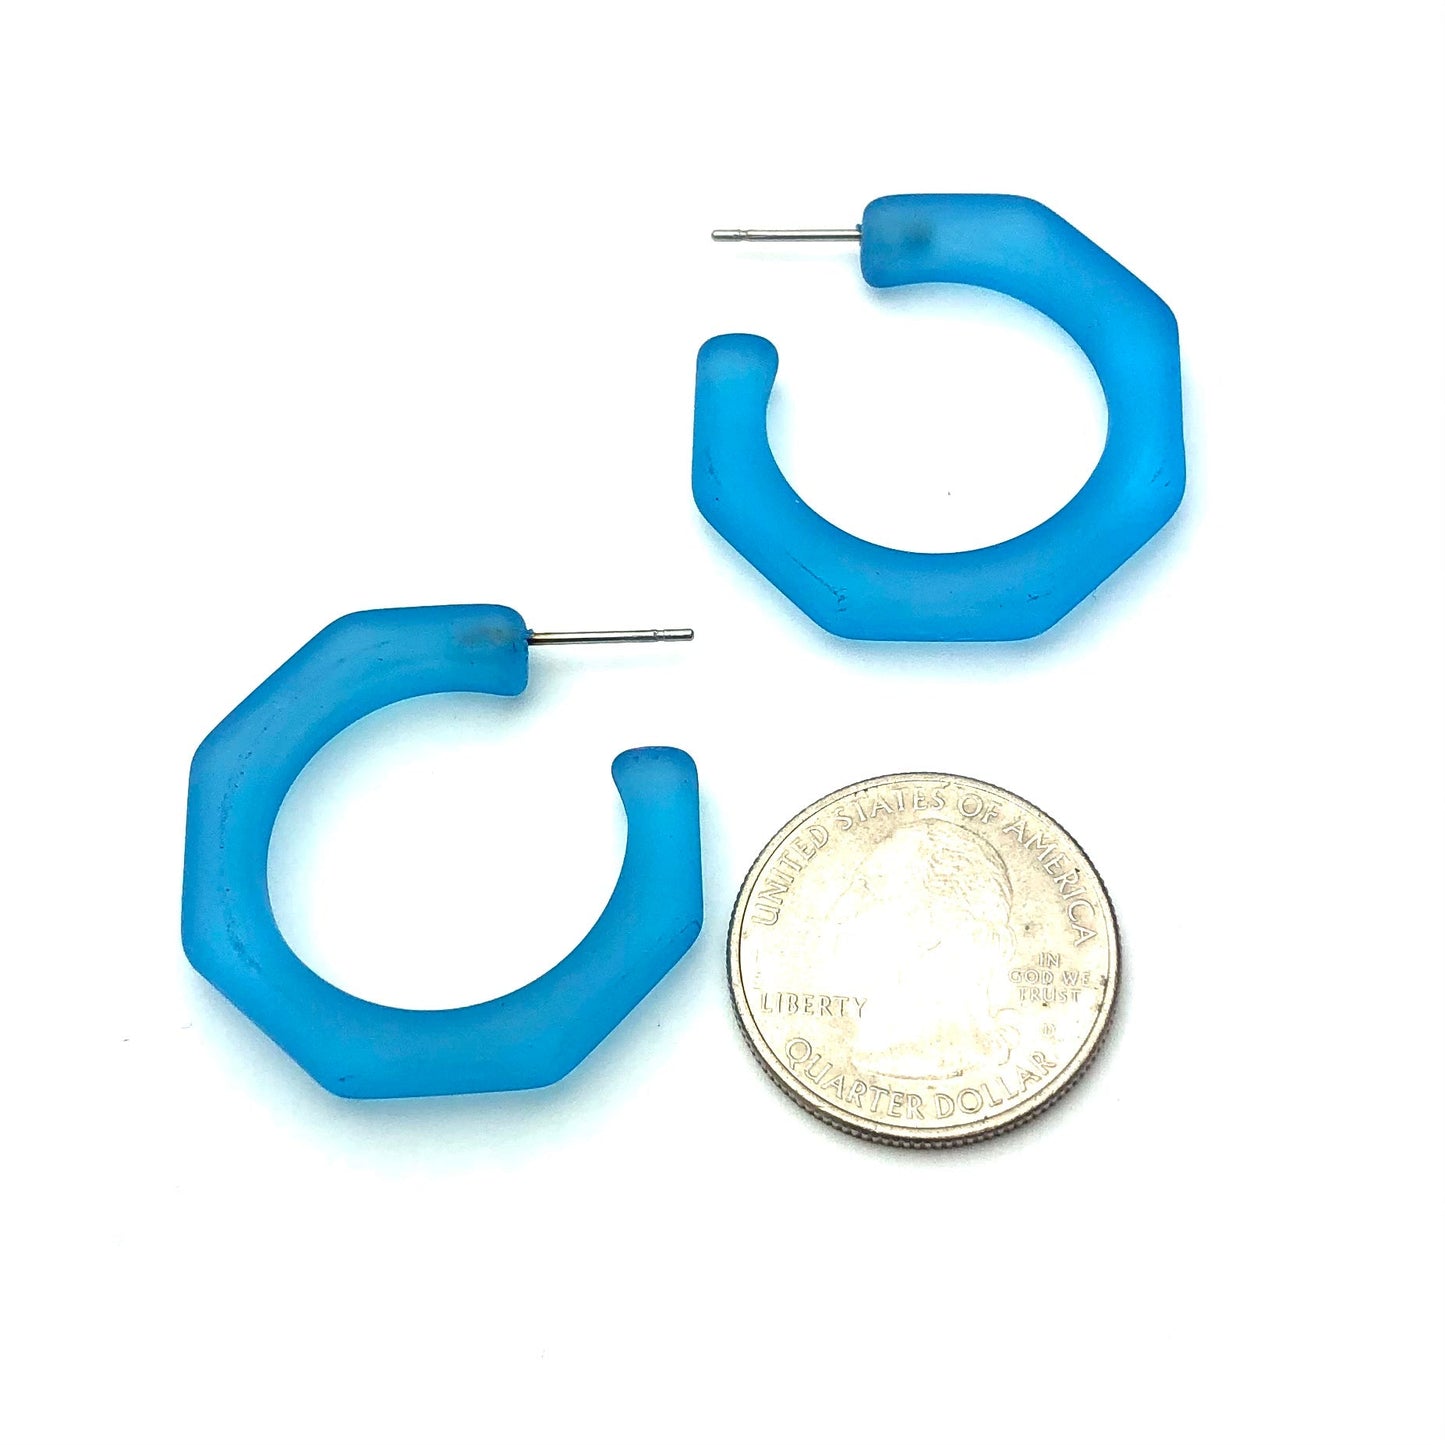 Aqua Blue Frosted Octagon Kay Hoop Earrings